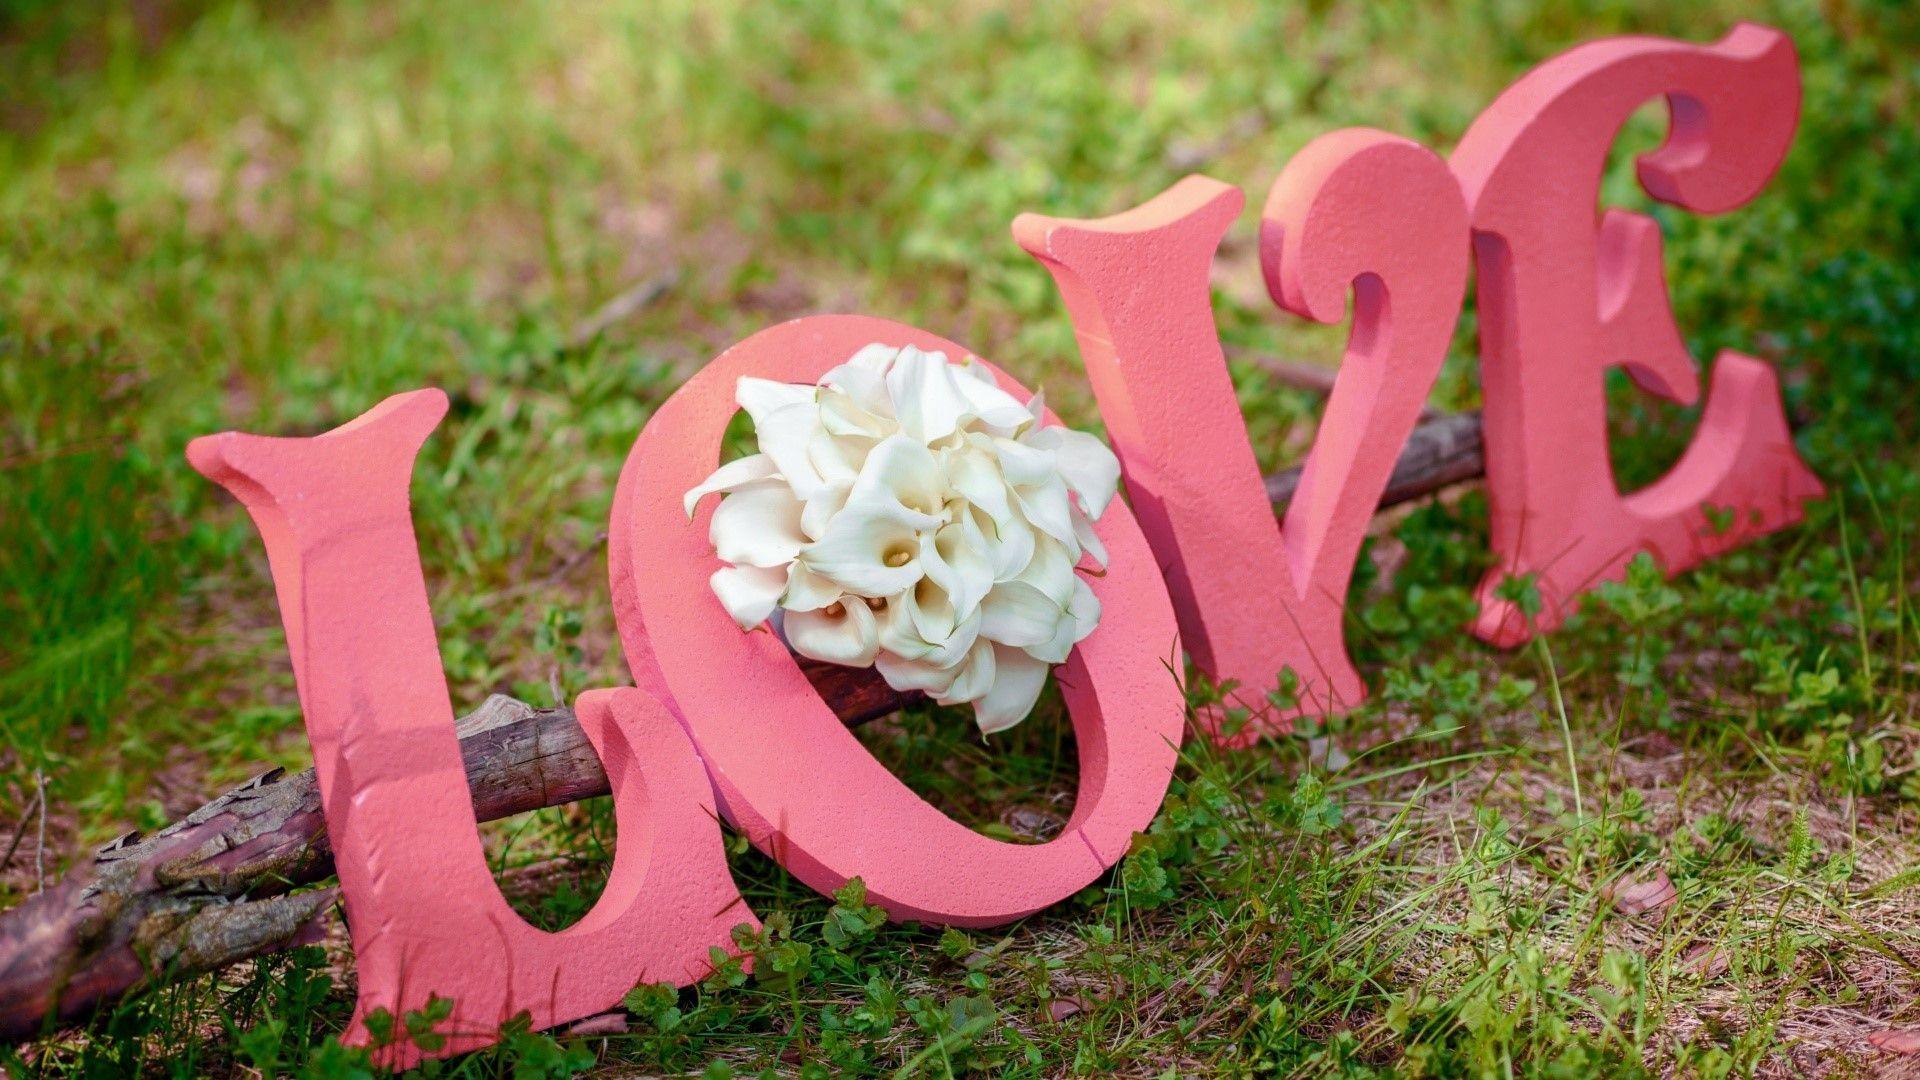 Download Love Romantic Wallpaper Group 1600×900 Romantic Image HD